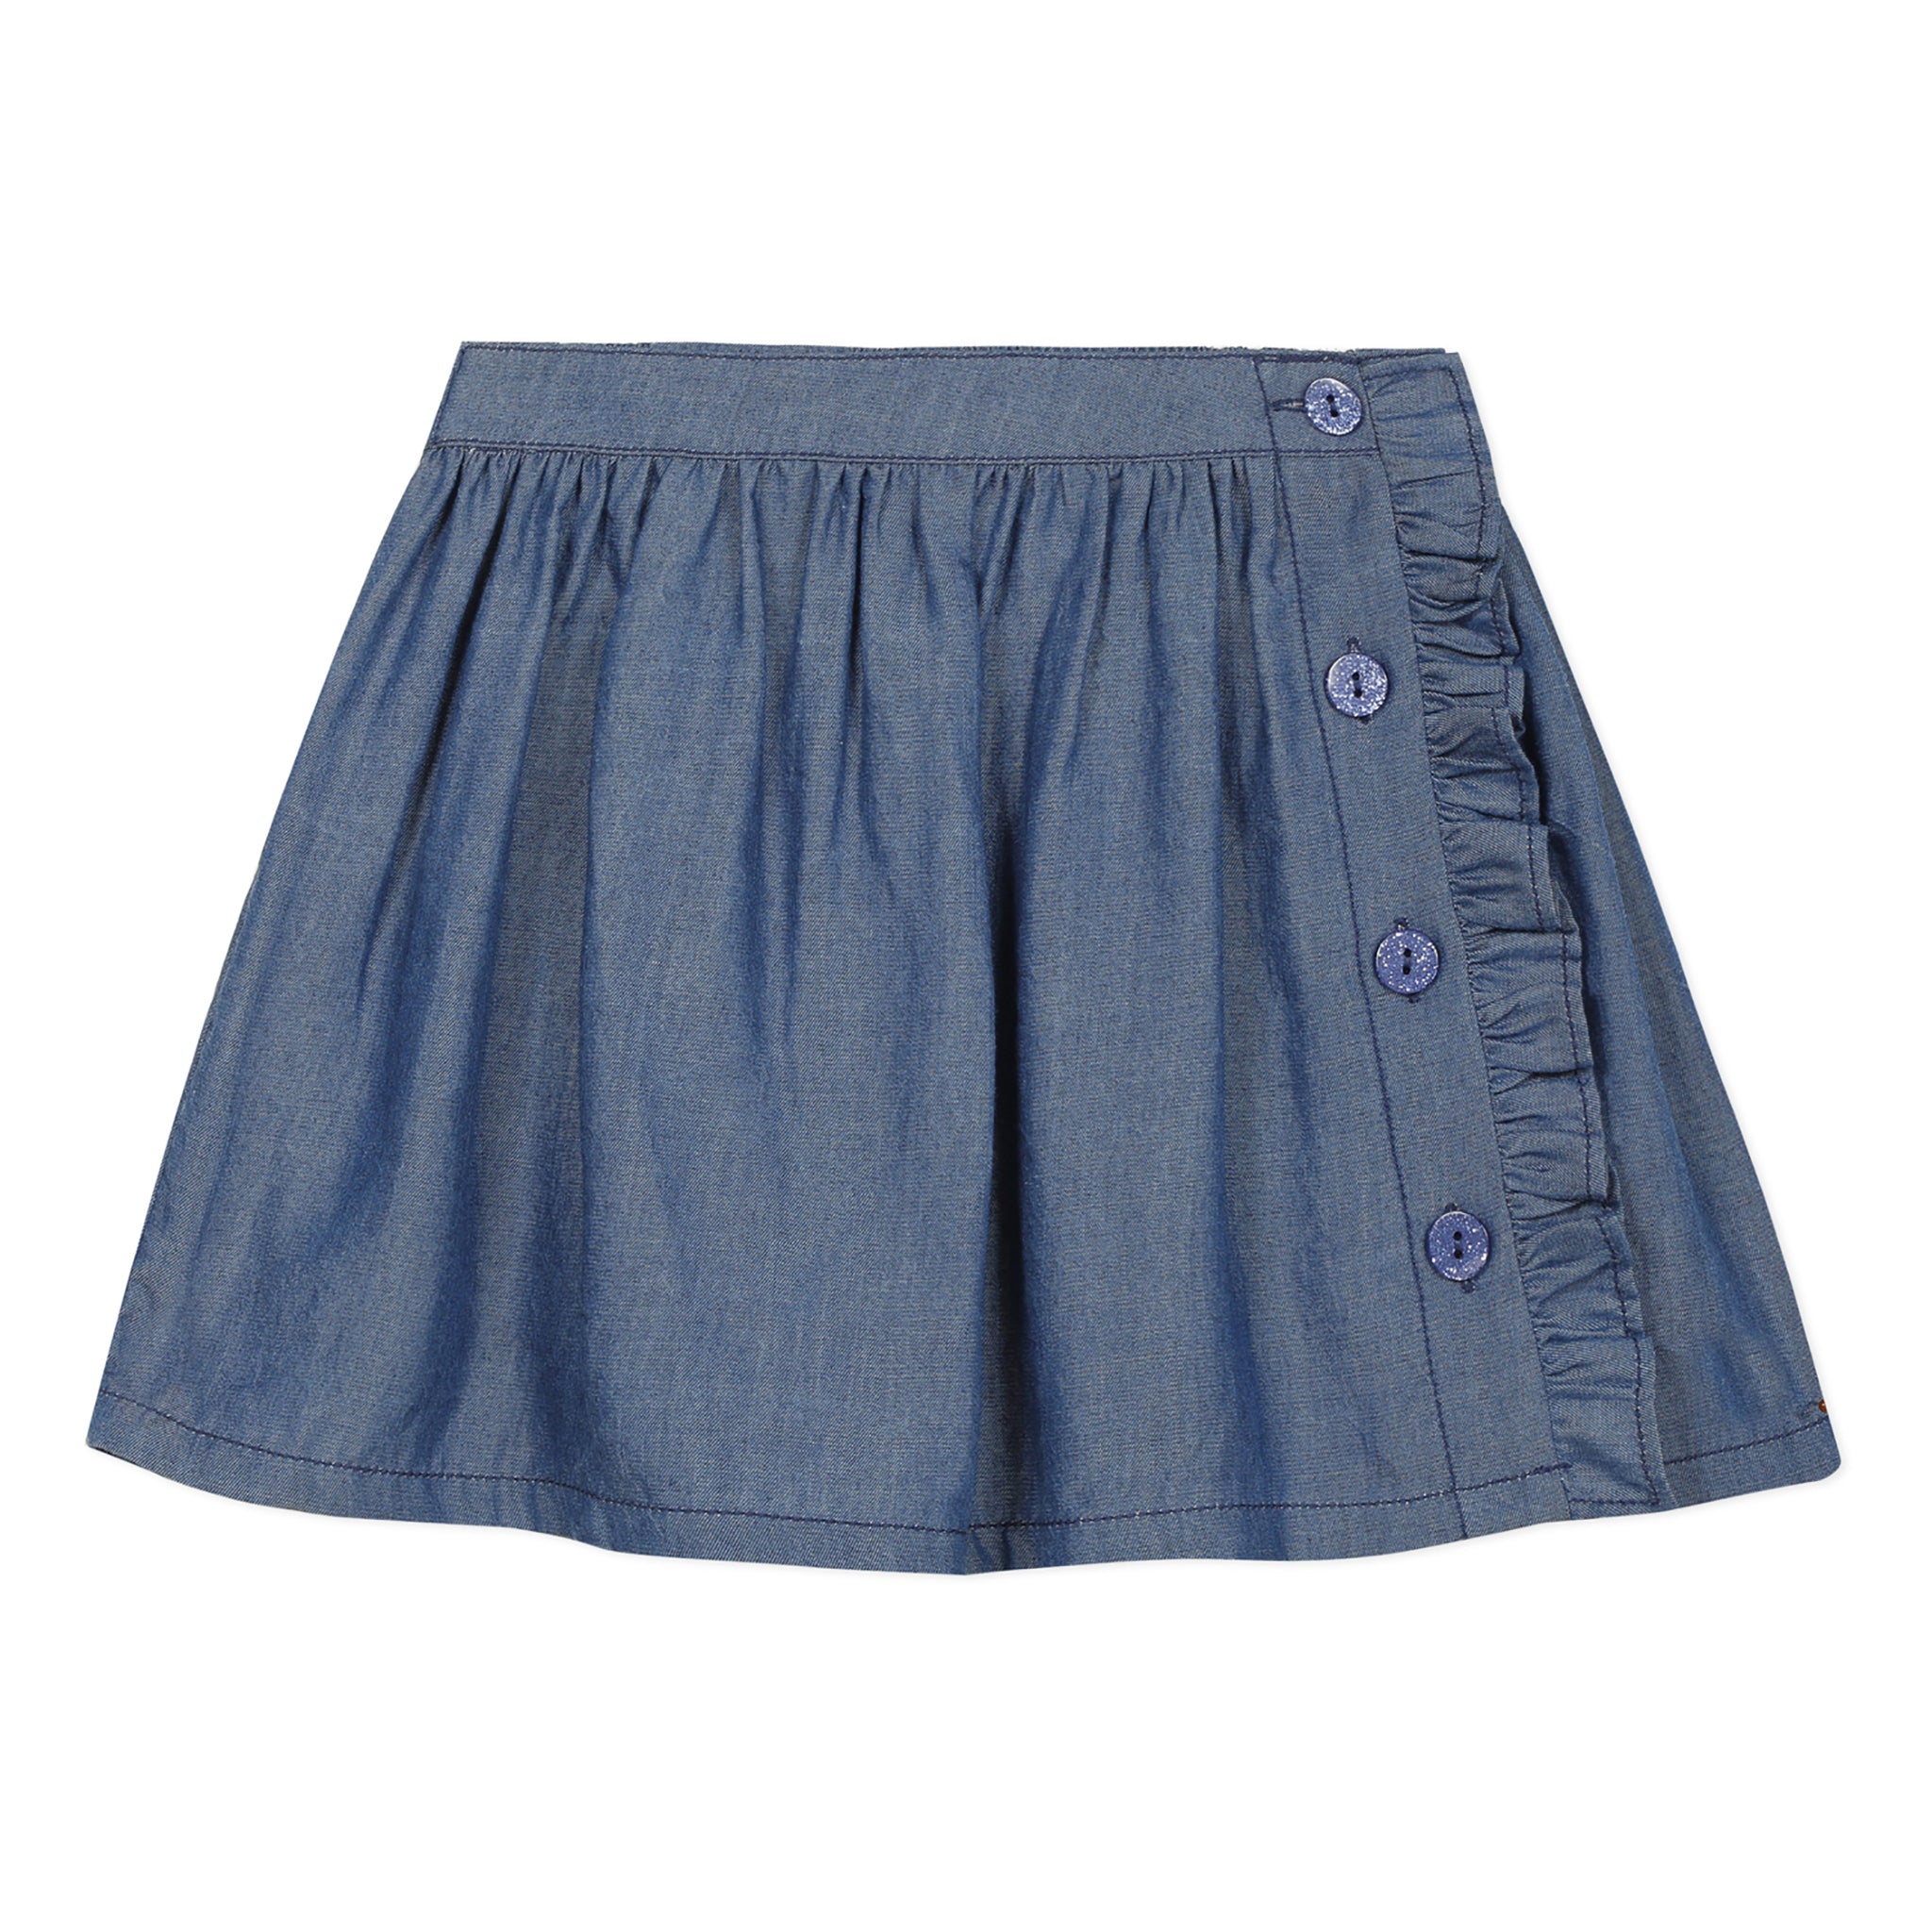 blue jean ruffle skirt